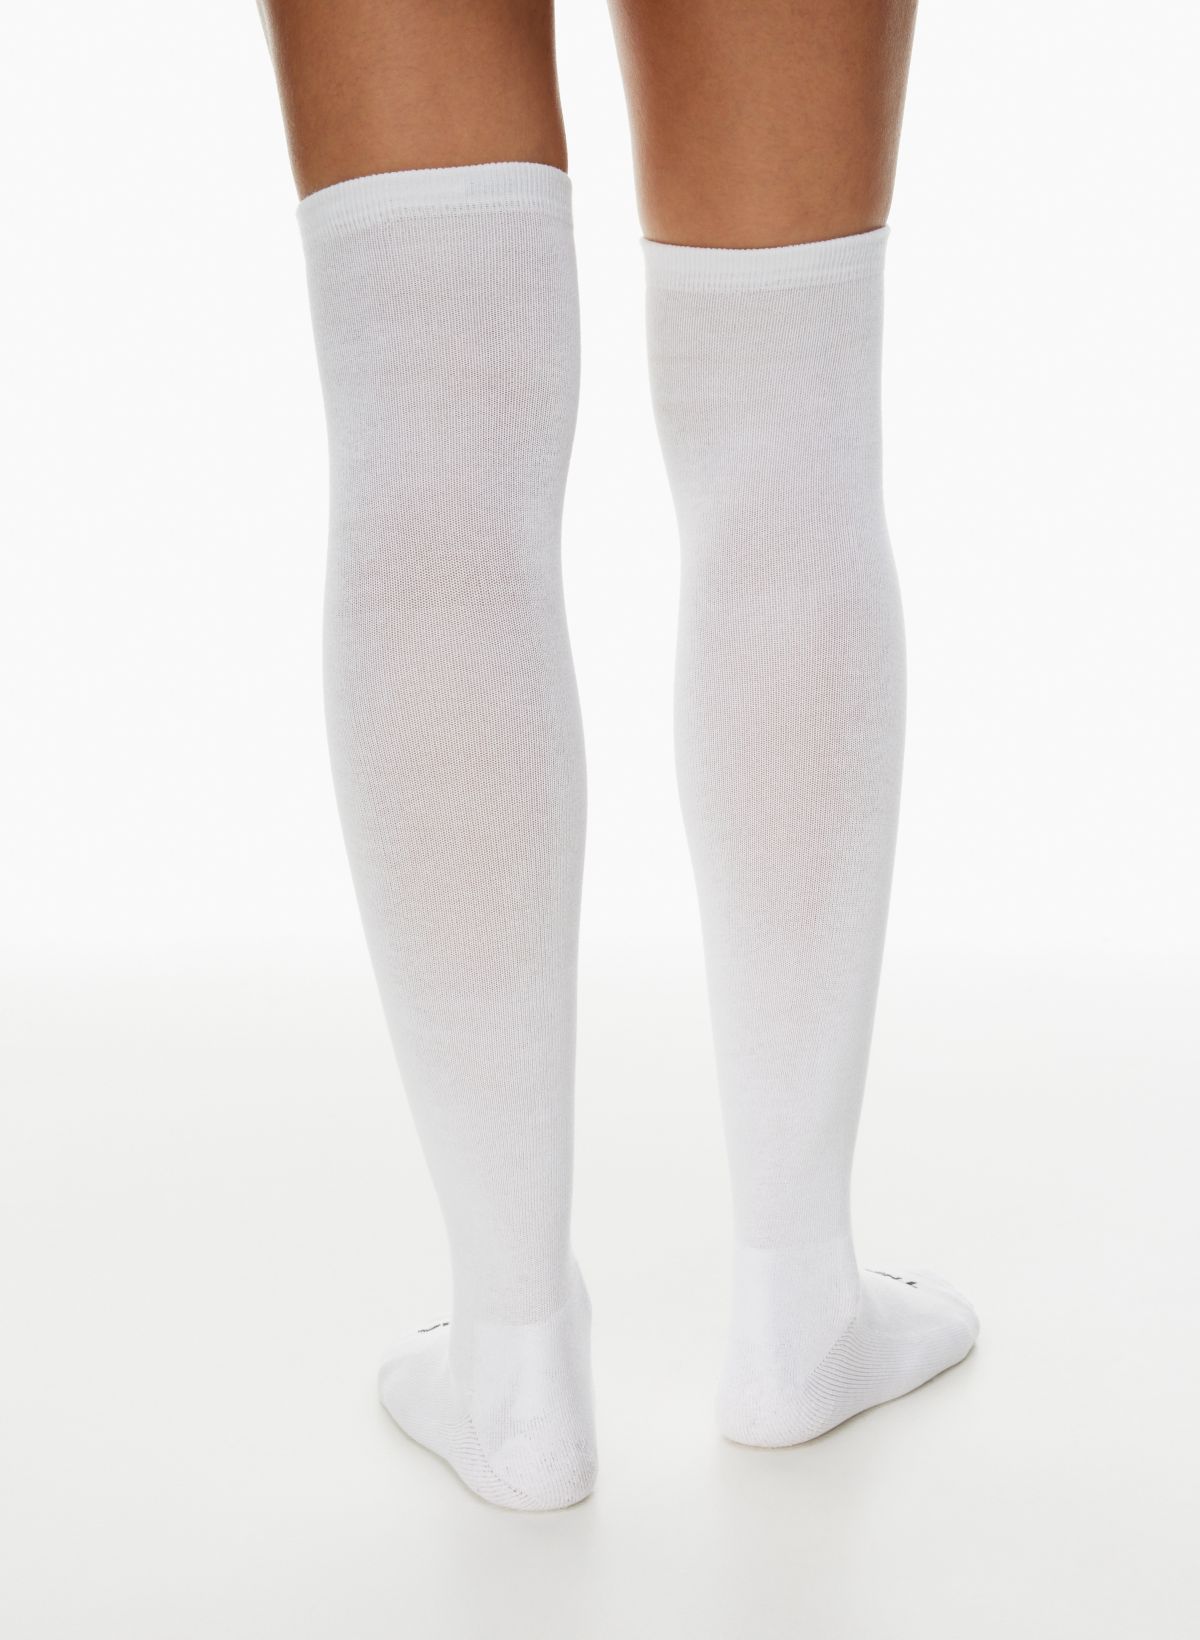 1980s Sportswear: Knee-High Tube Socks, Tank, and Short-Shorts